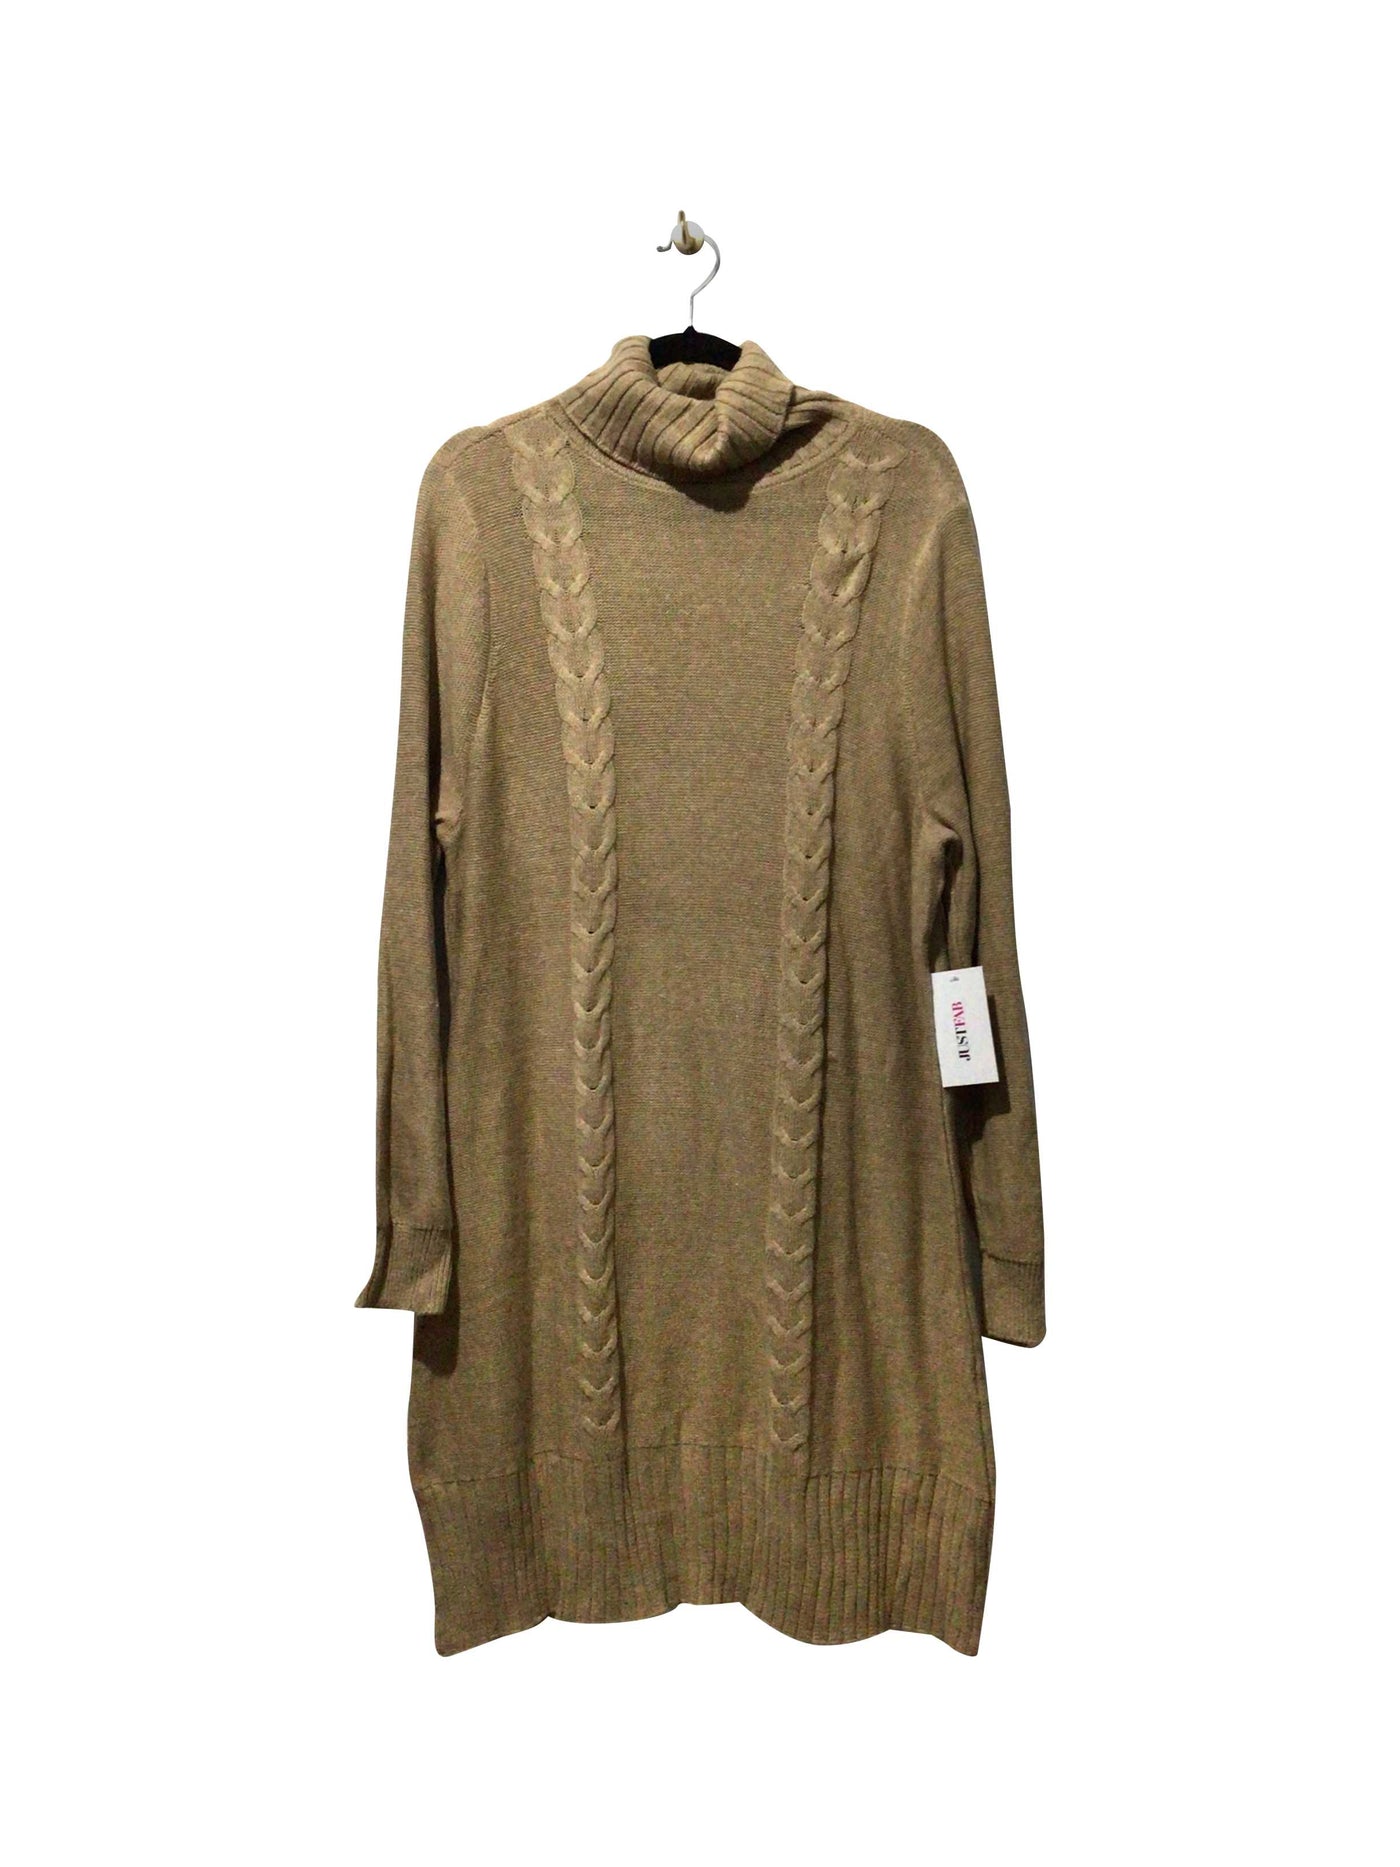 JUSTFAB Regular fit Wrap Dress in Beige  -  2X  20.14 Koop